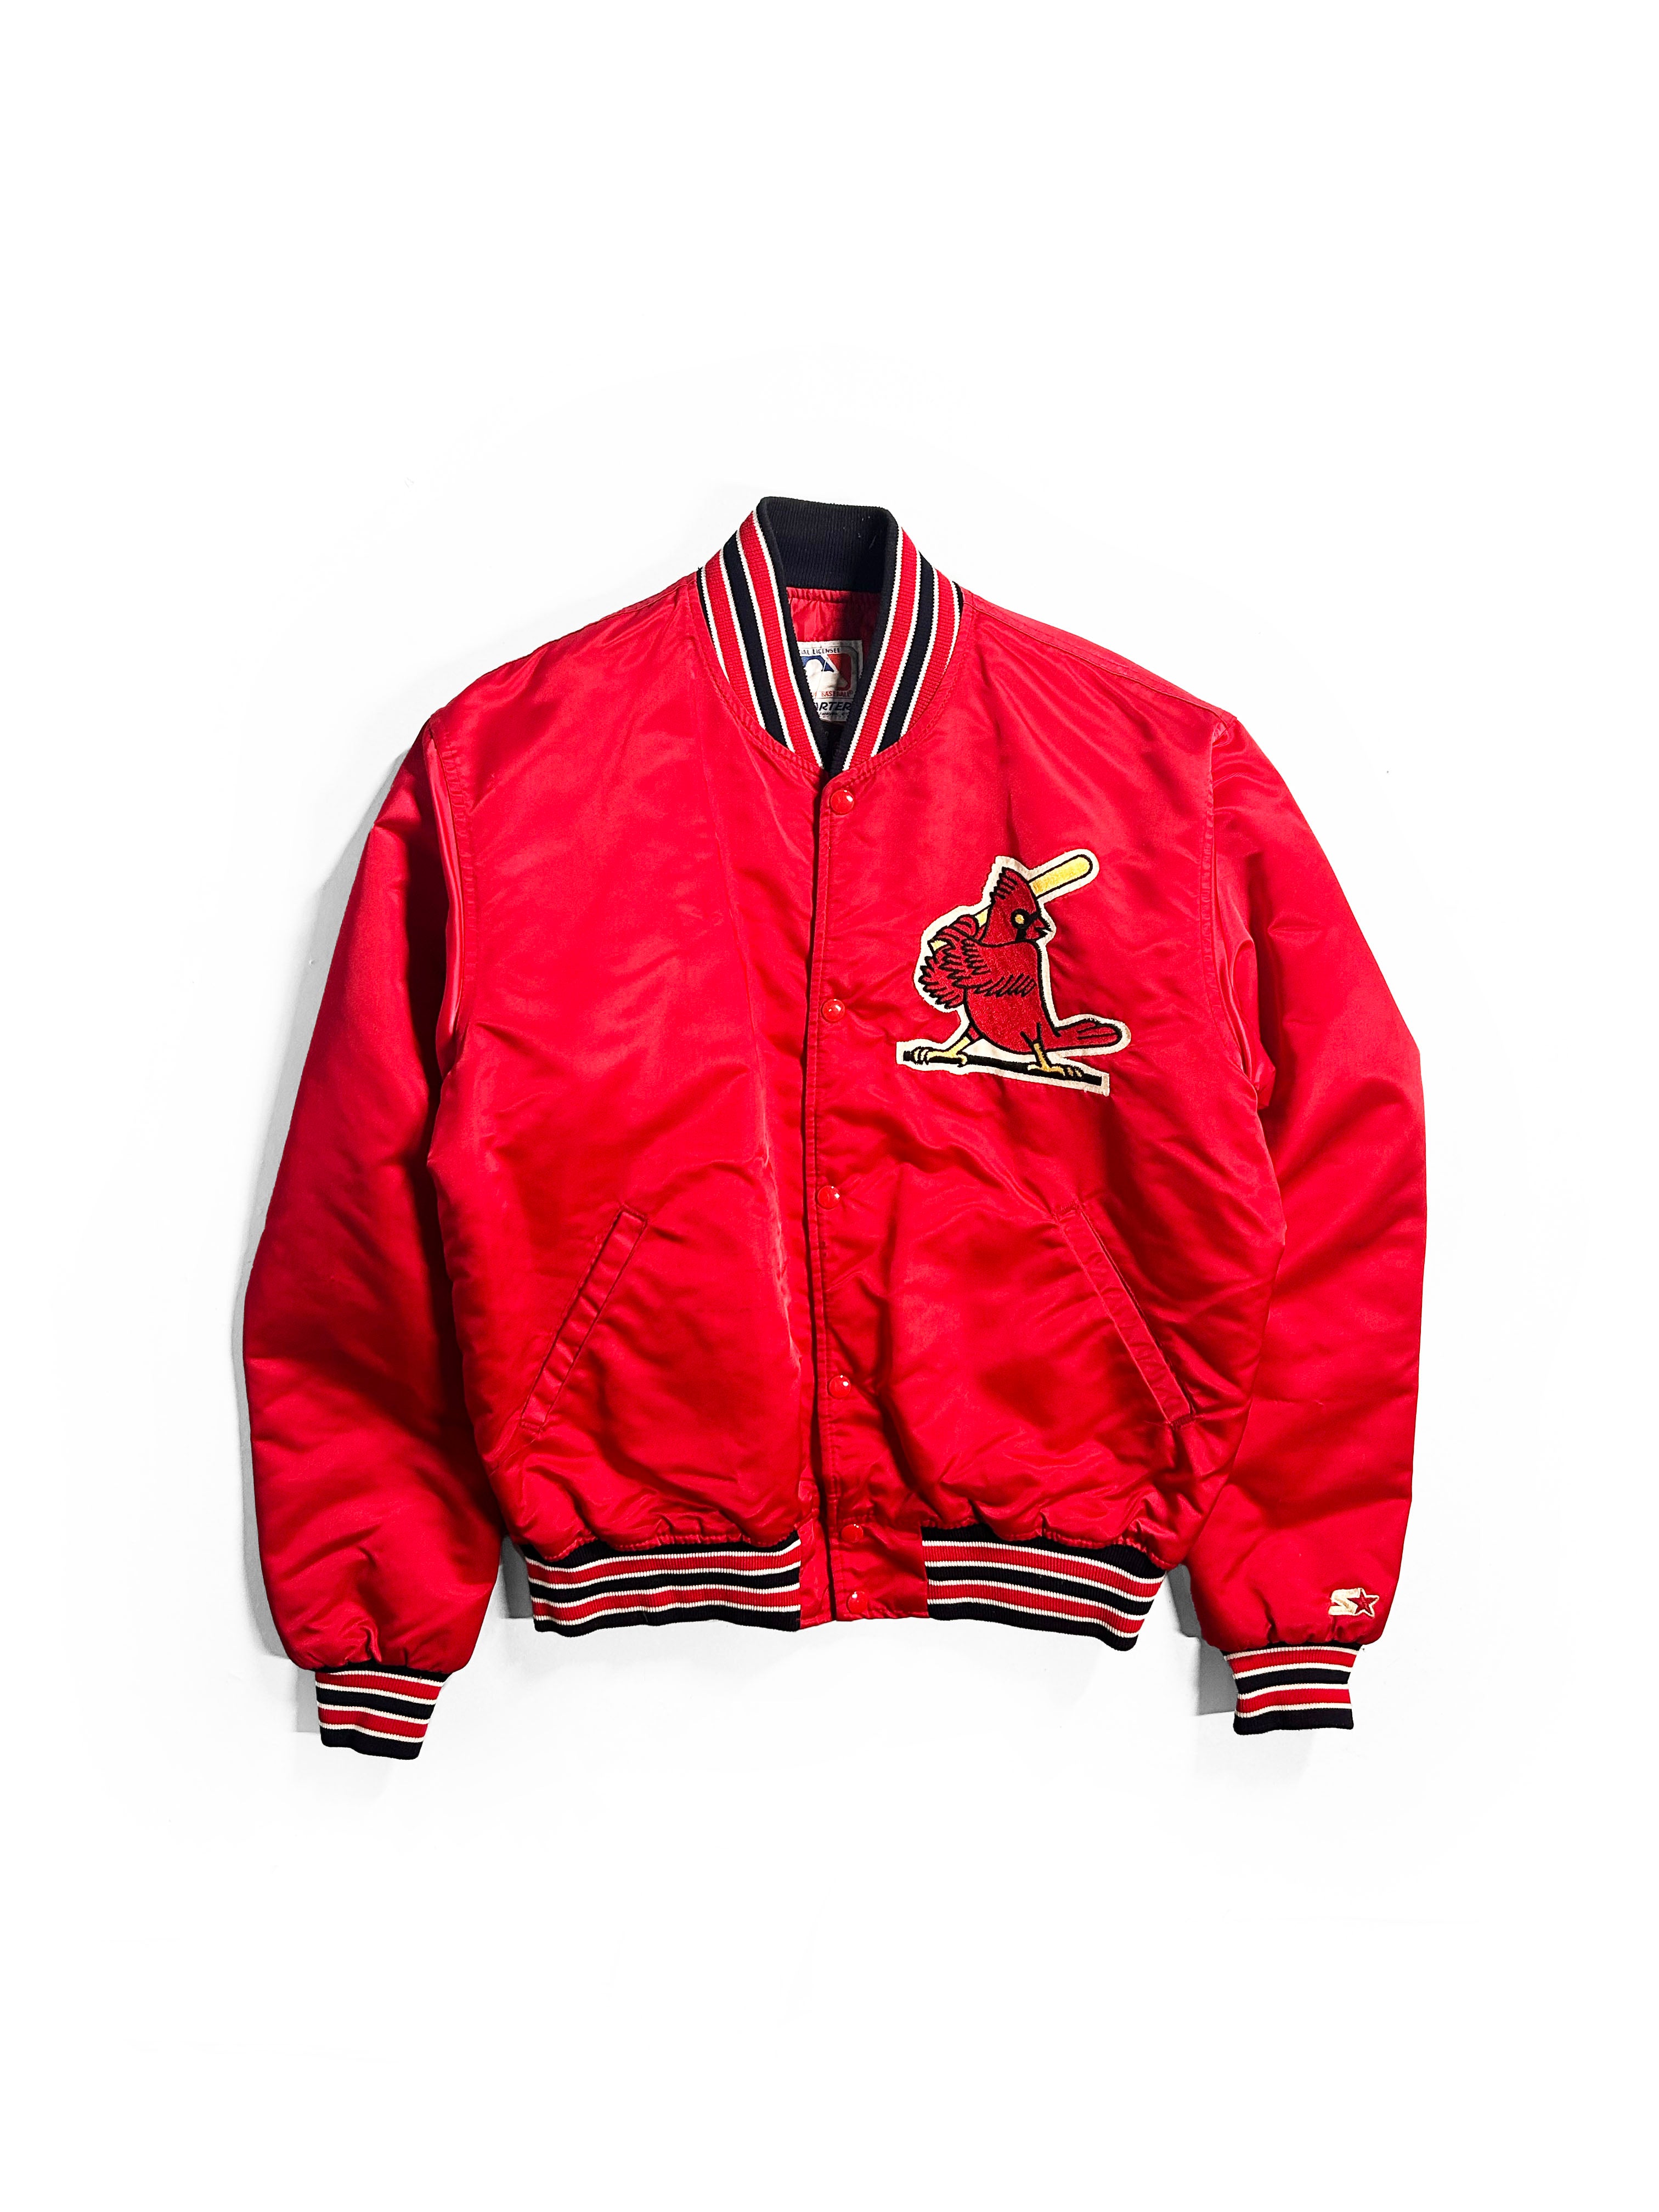 Outerwear - St. Louis Cardinals Throwback Apparel & Jerseys